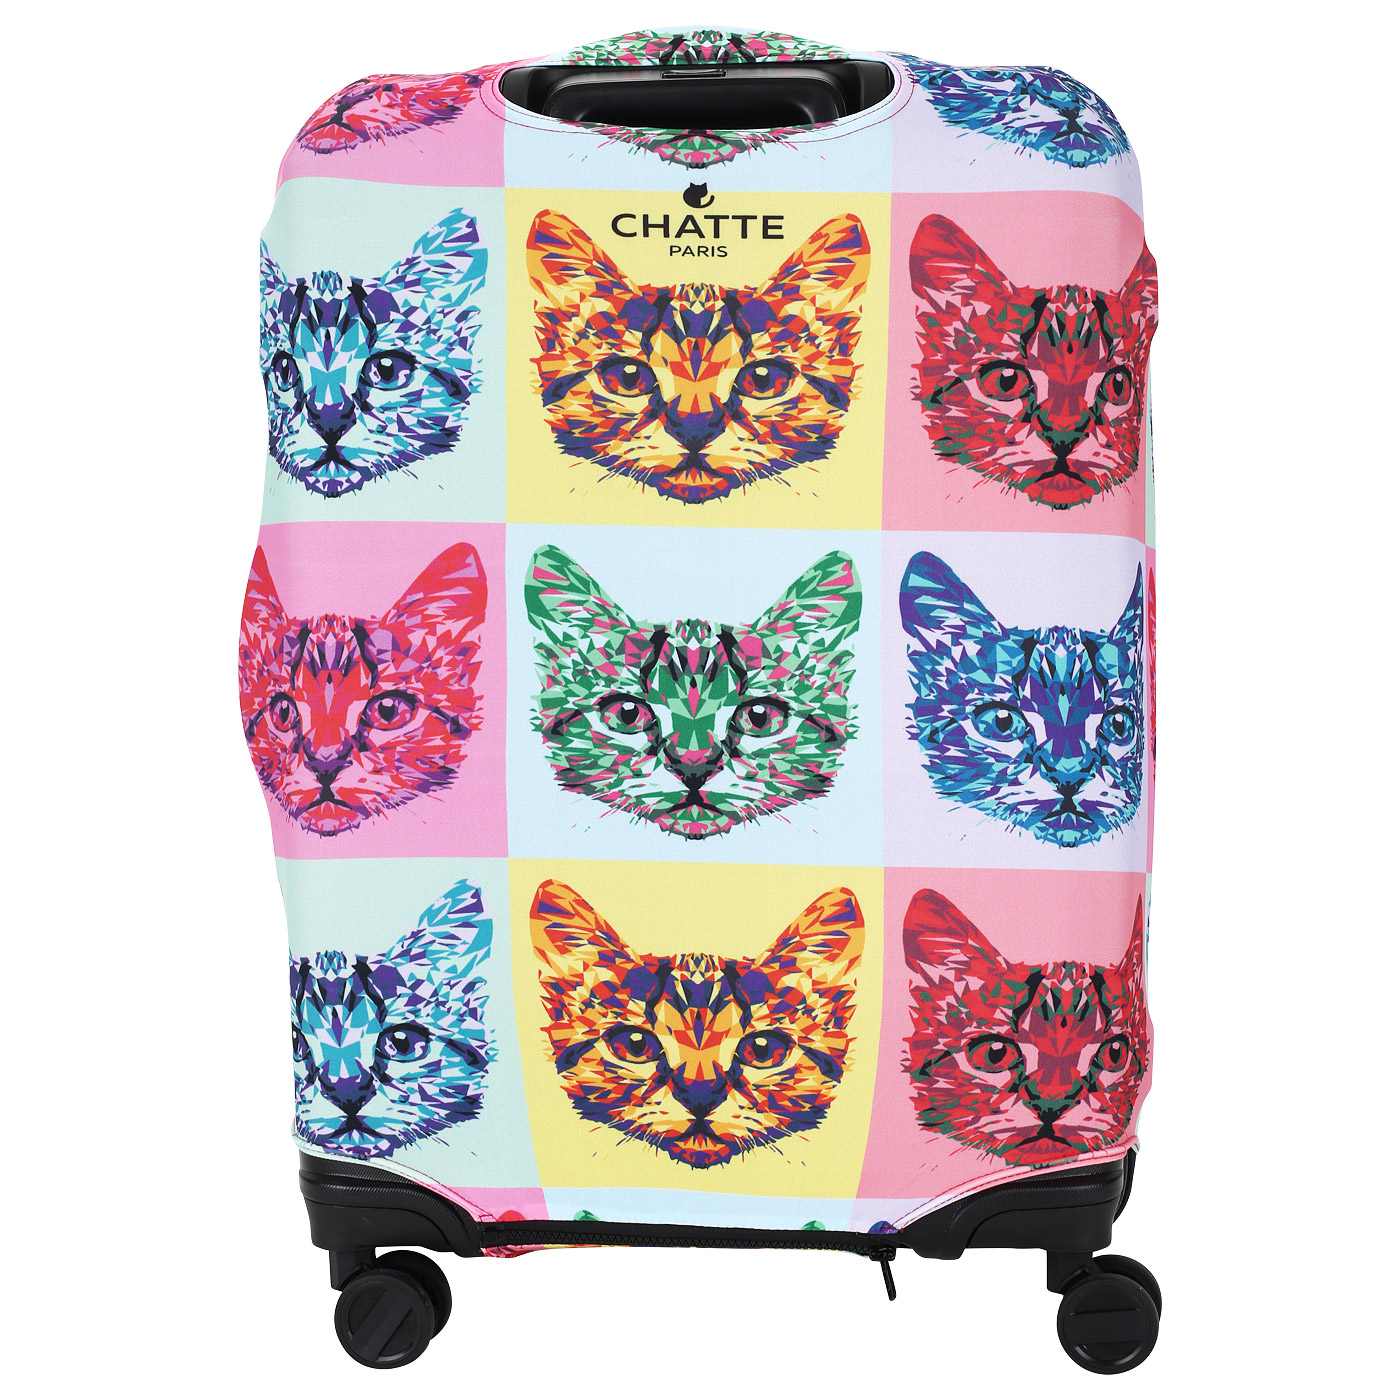 Чехол для крупного чемодана с ярким принтом Chatte Cats